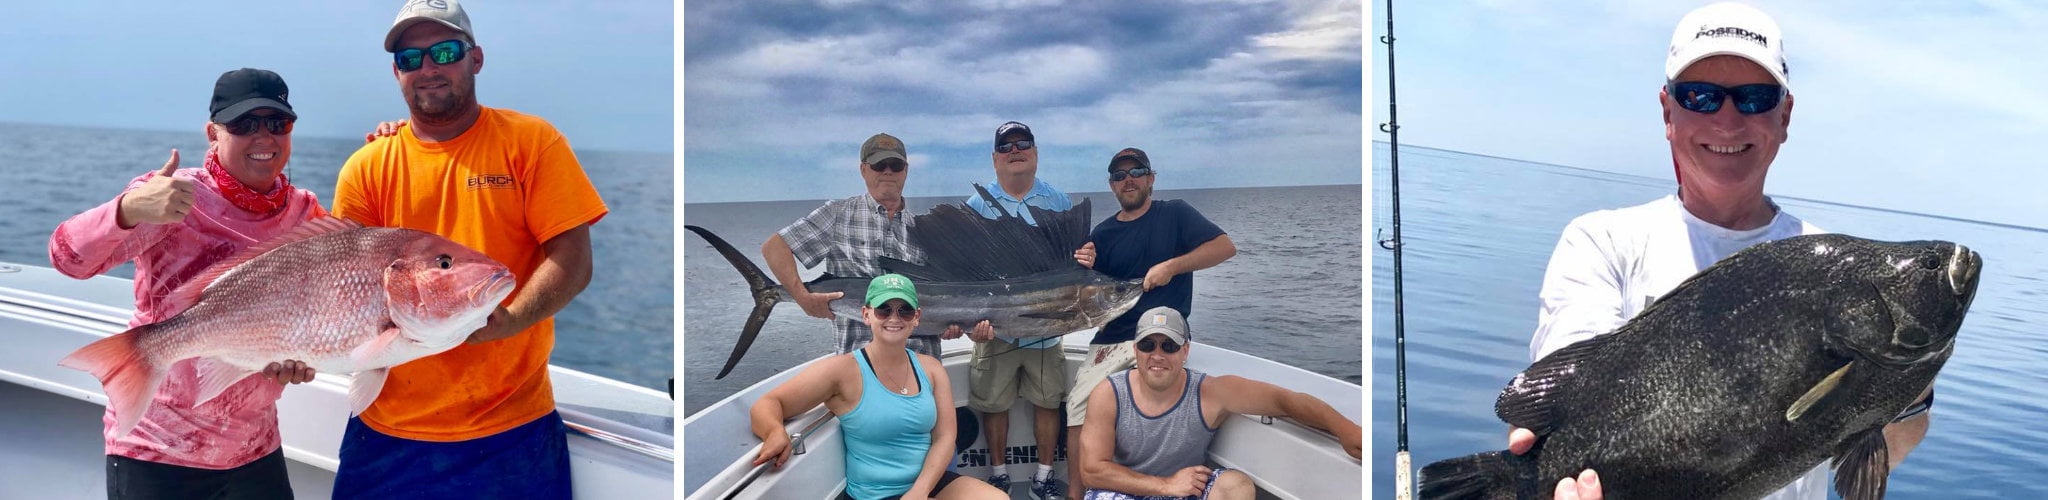 Apalachicola Fishing Company Fishing Charters and Trips